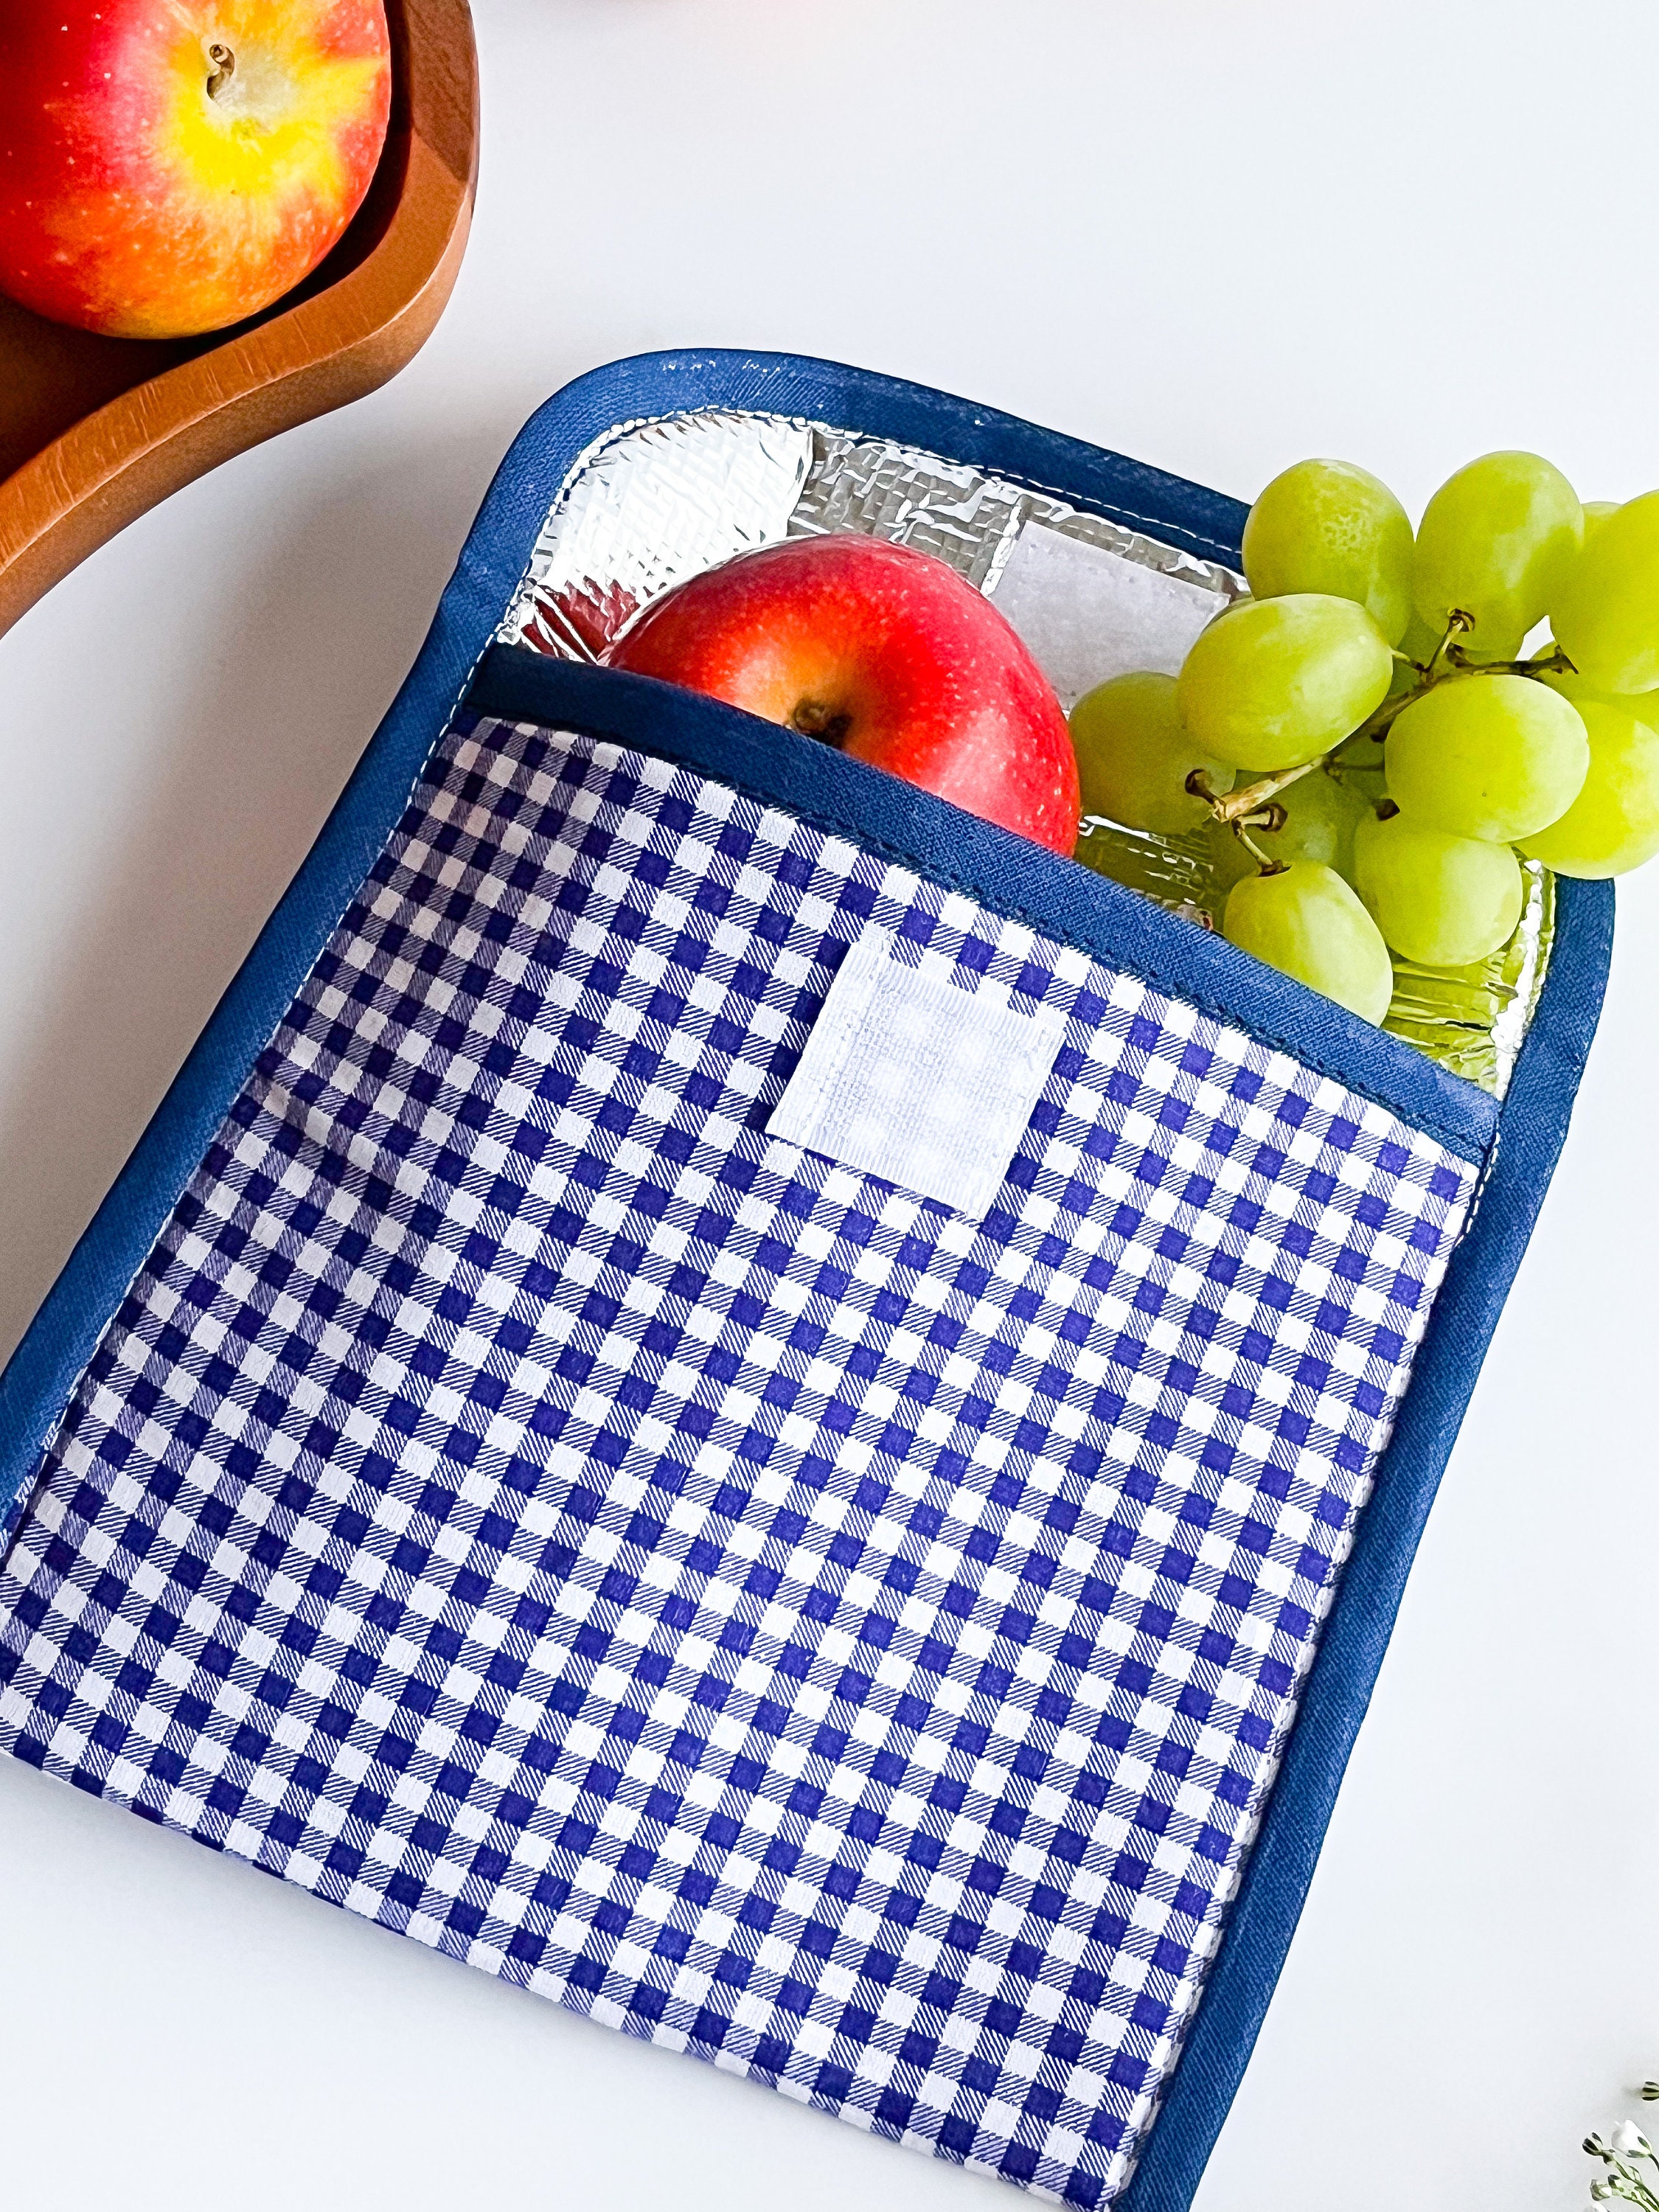 300 Fold Top Sandwich Bags Lunch Treat Baggies Snack School Plastic Food  Storage